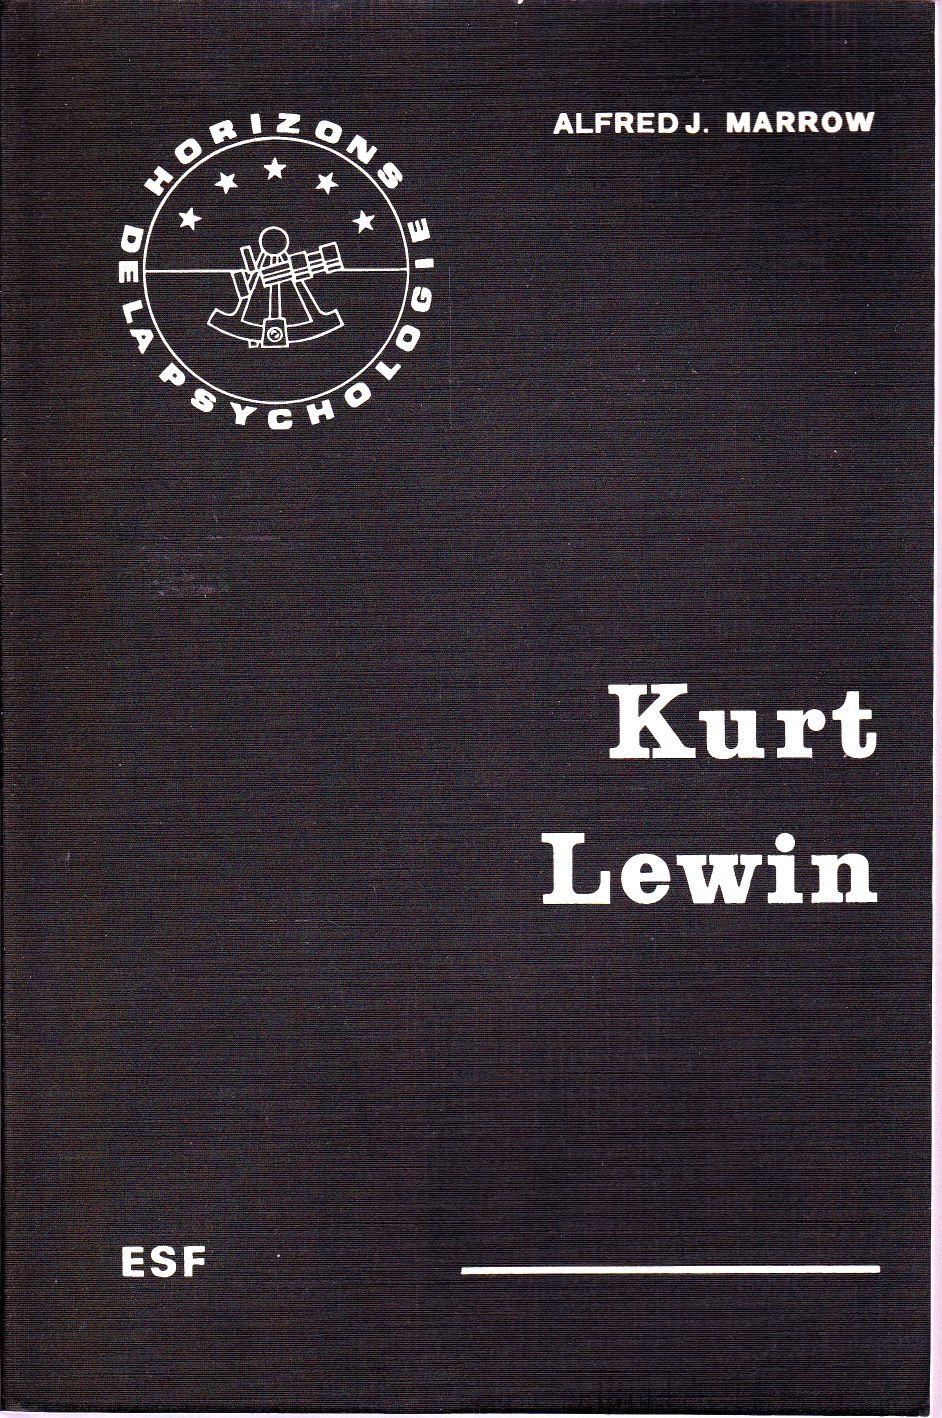 Kurt Lewin, sa vie et son oeuvre. - MARROW, Alfred J.